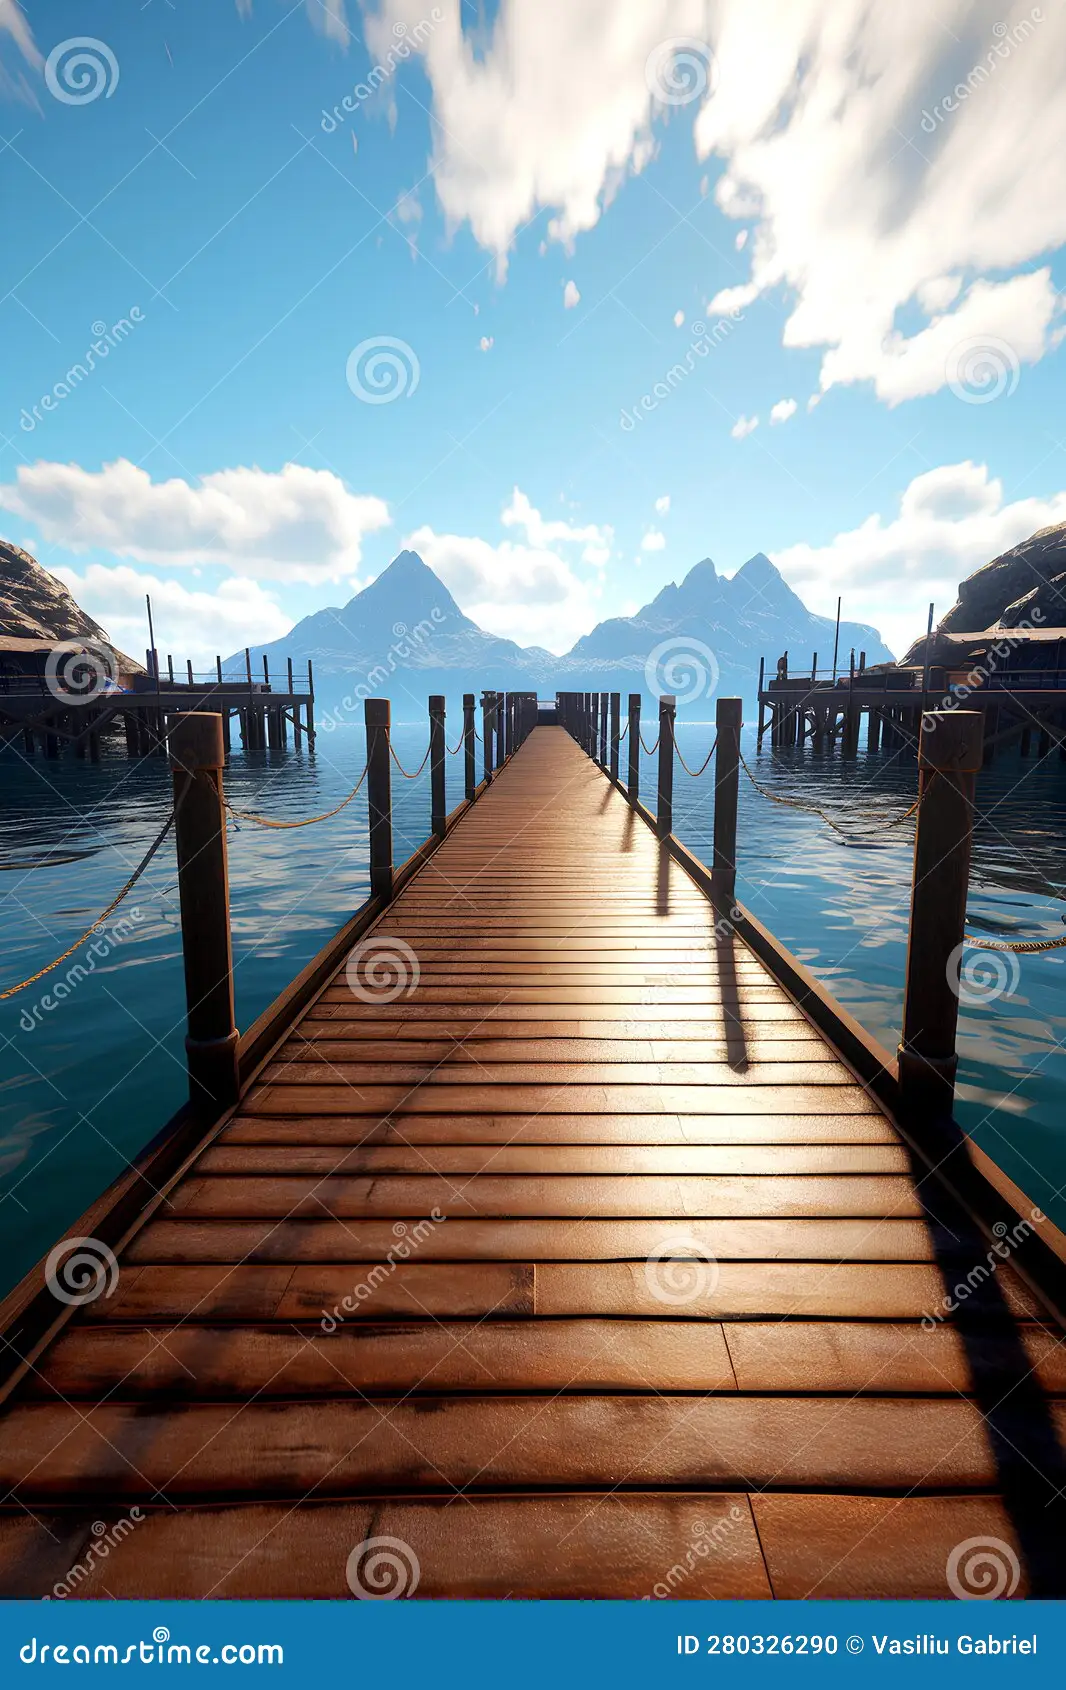 The long wooden pier, elegant 